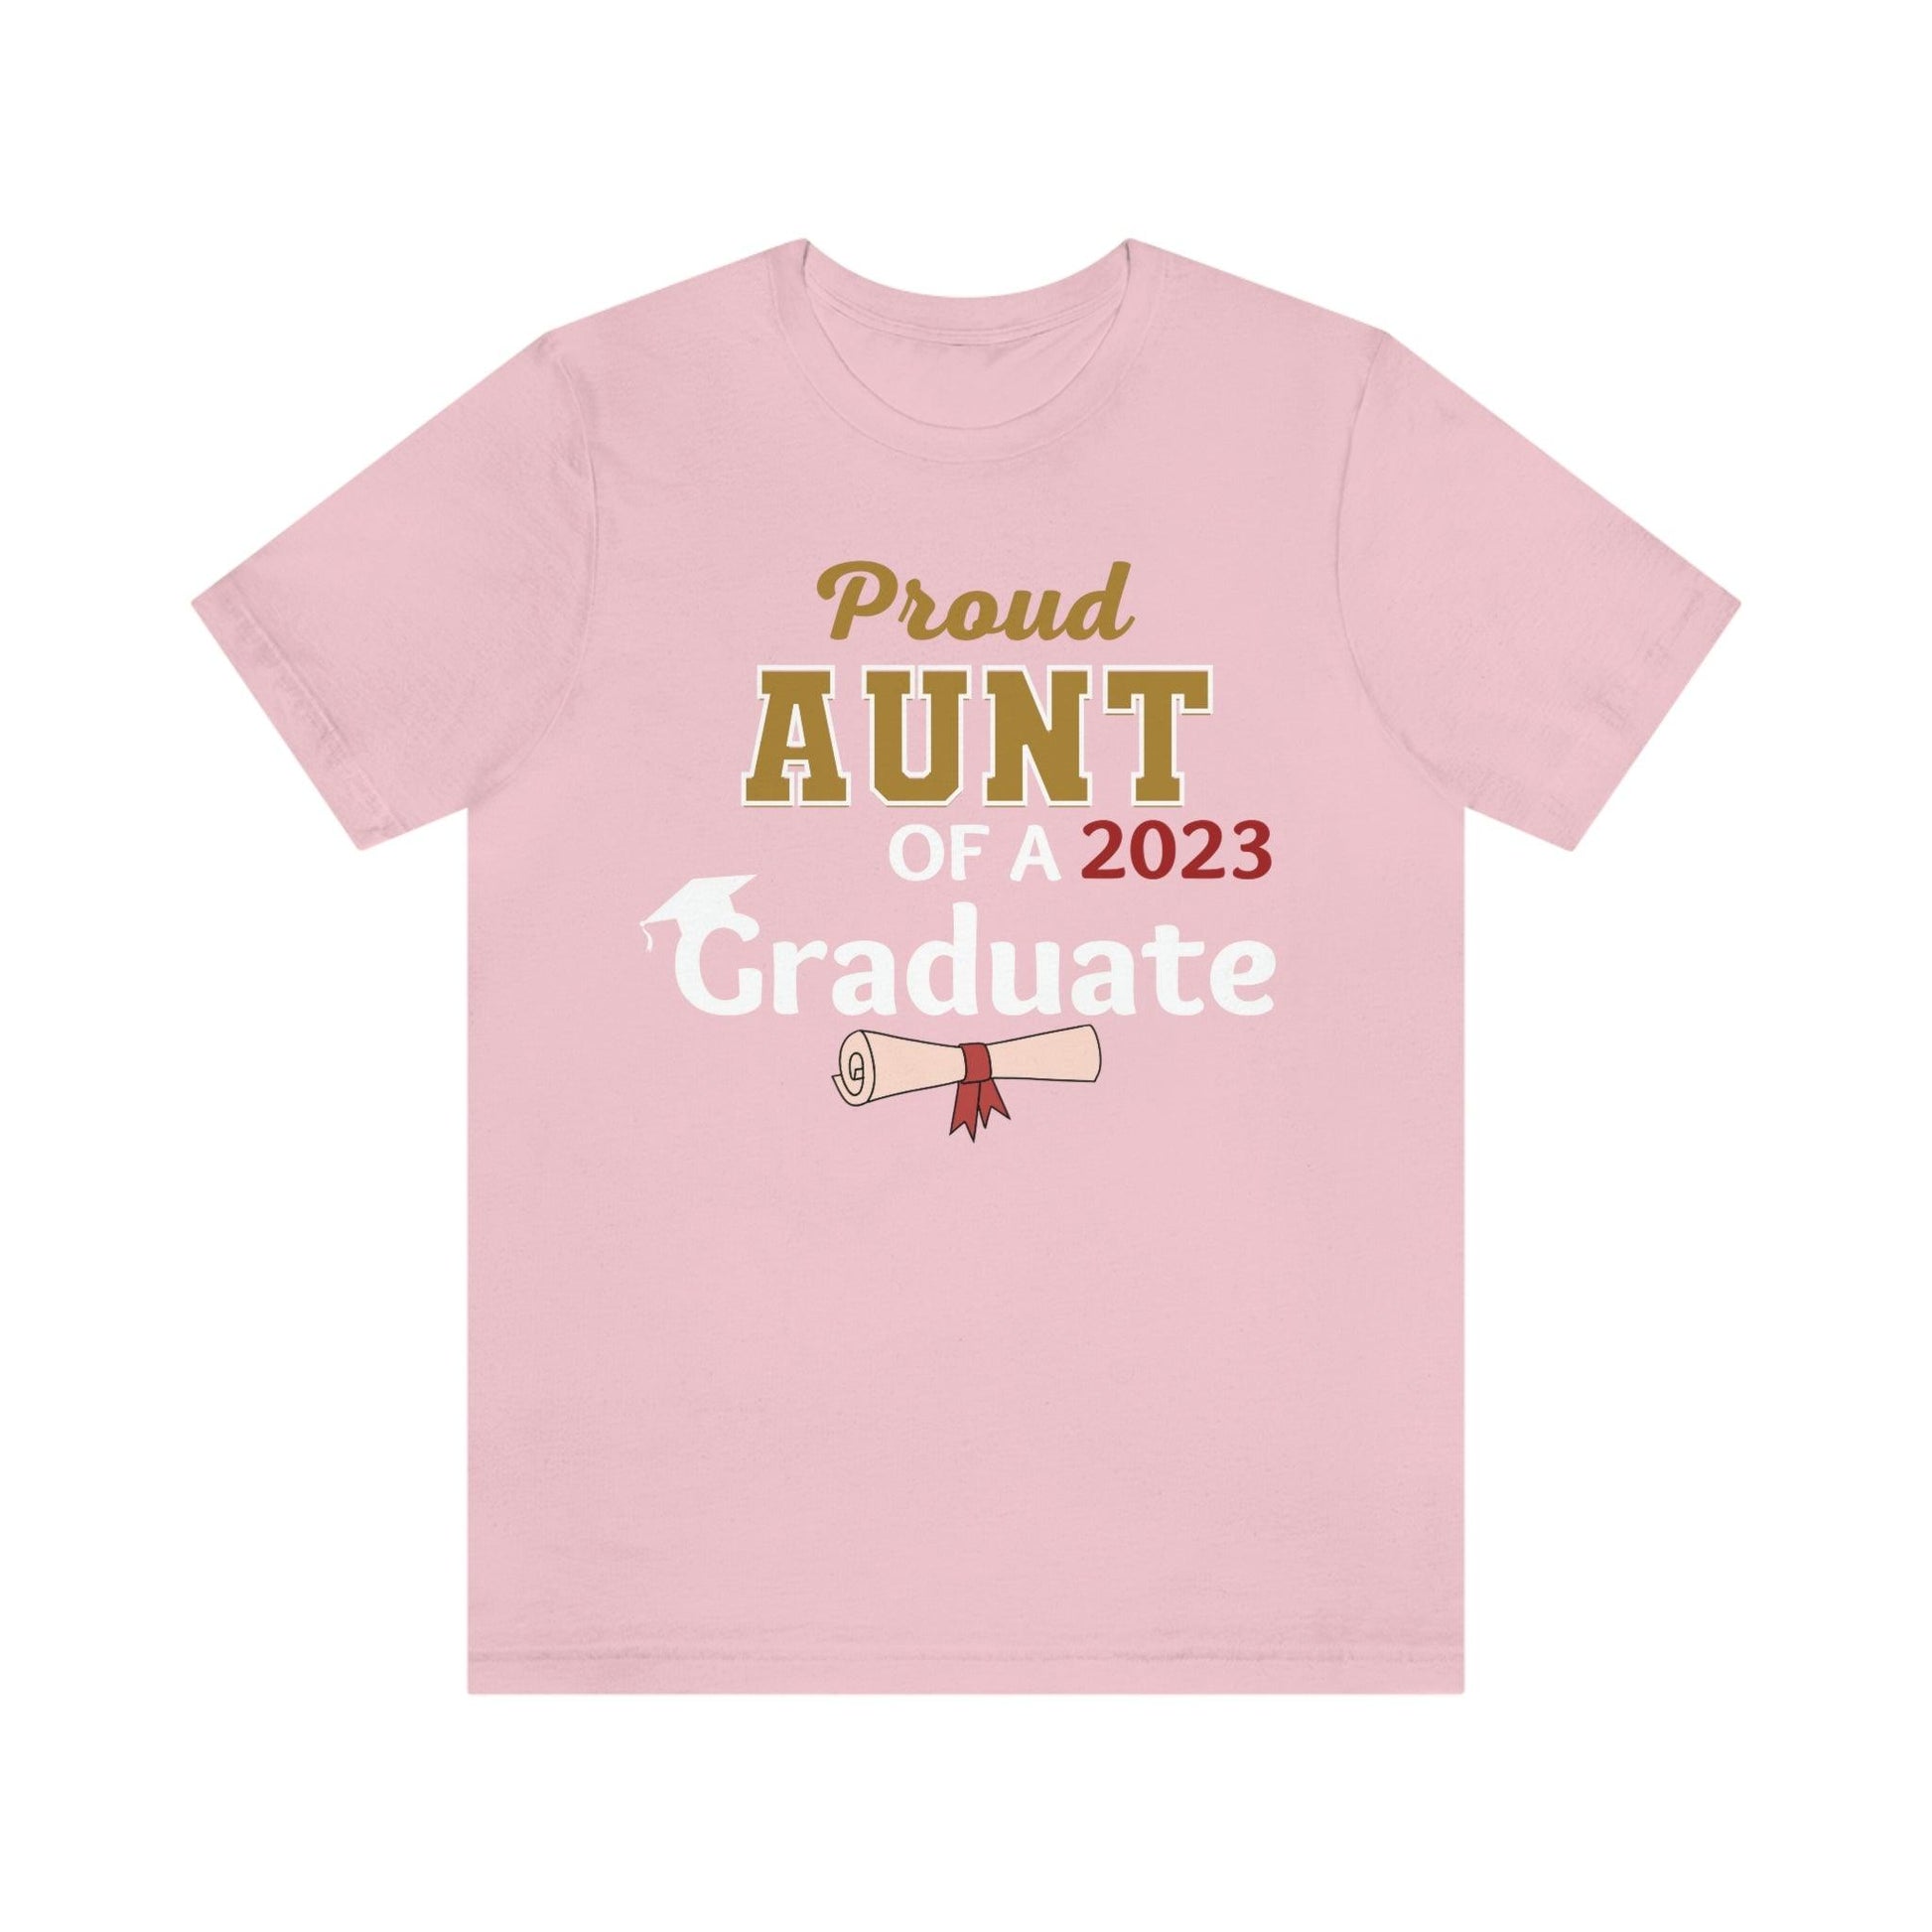 Proud Aunt of a Graduate shirt - Graduation shirt - Graduation gift - Giftsmojo